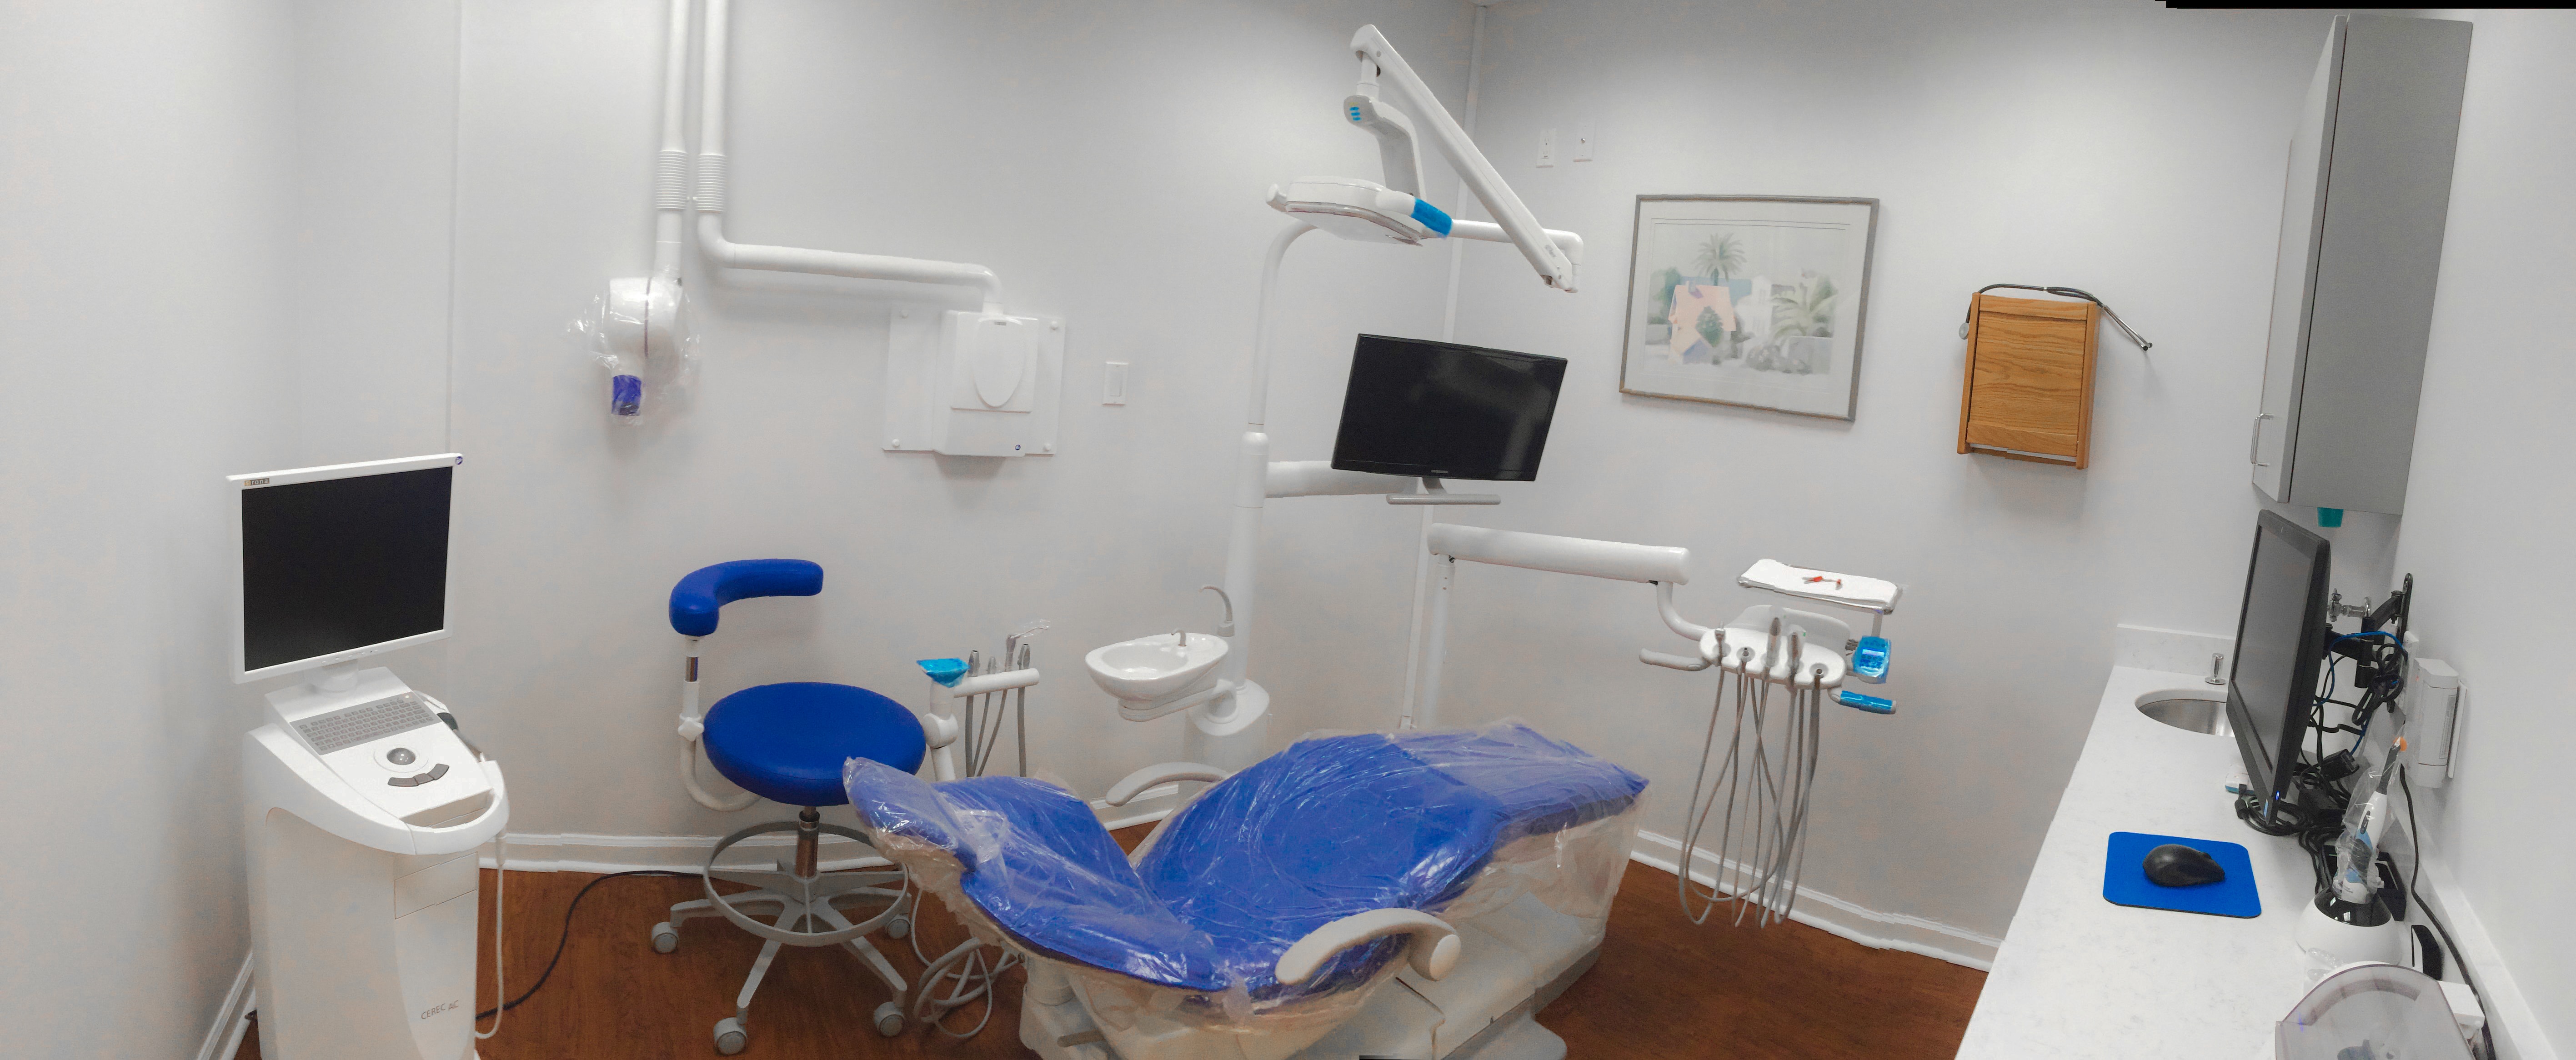 Concord Dental - New York, NY, US, dental hygienist